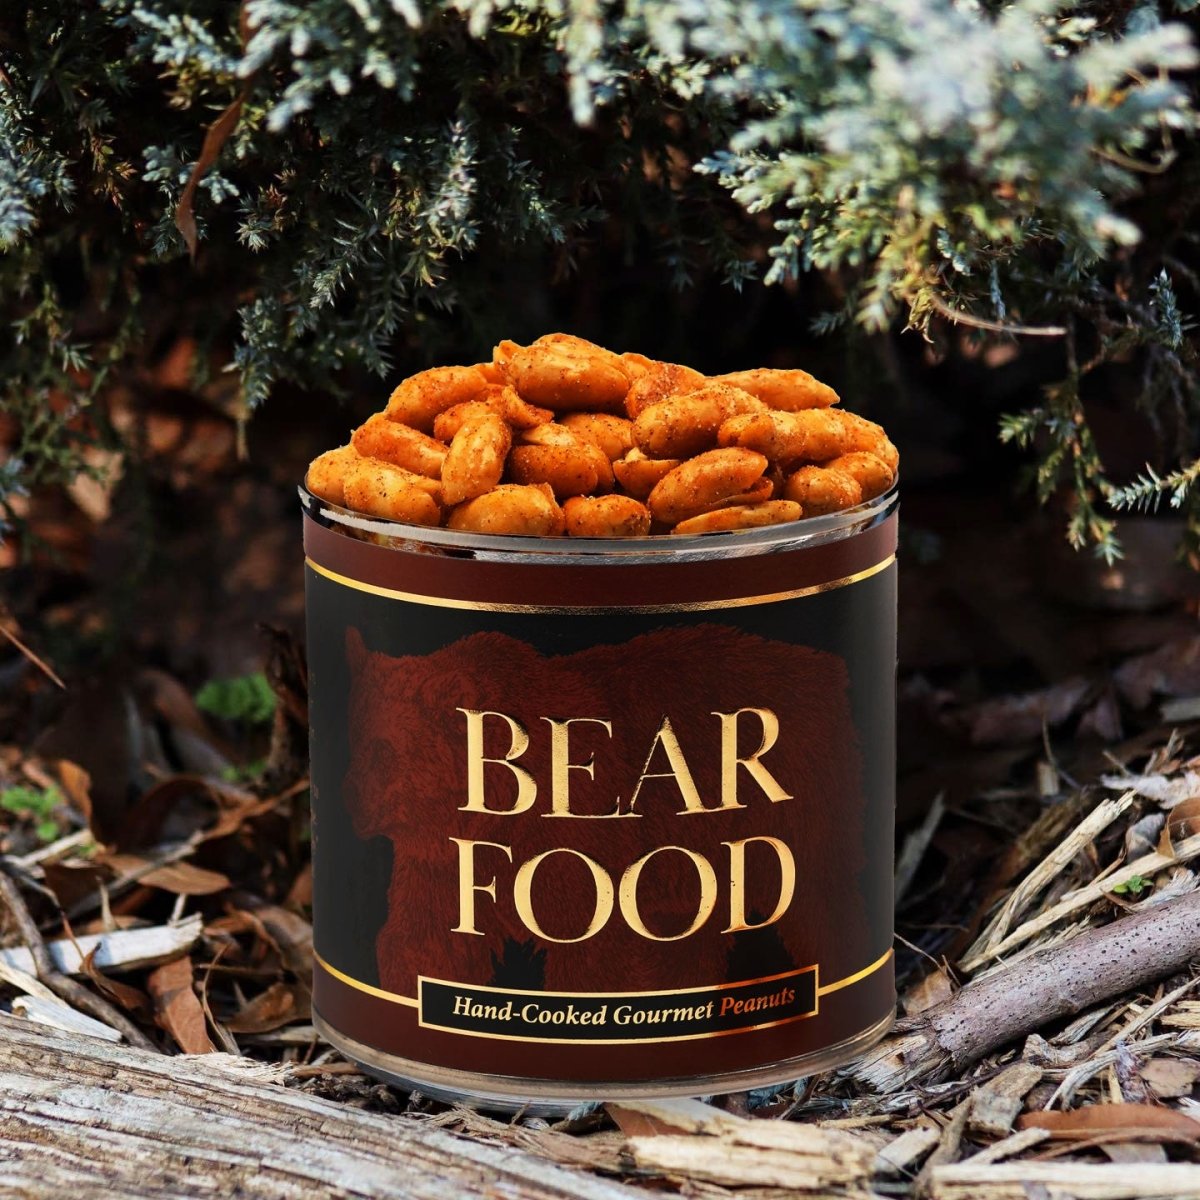 bear food cajun spice gourmet peanuts.